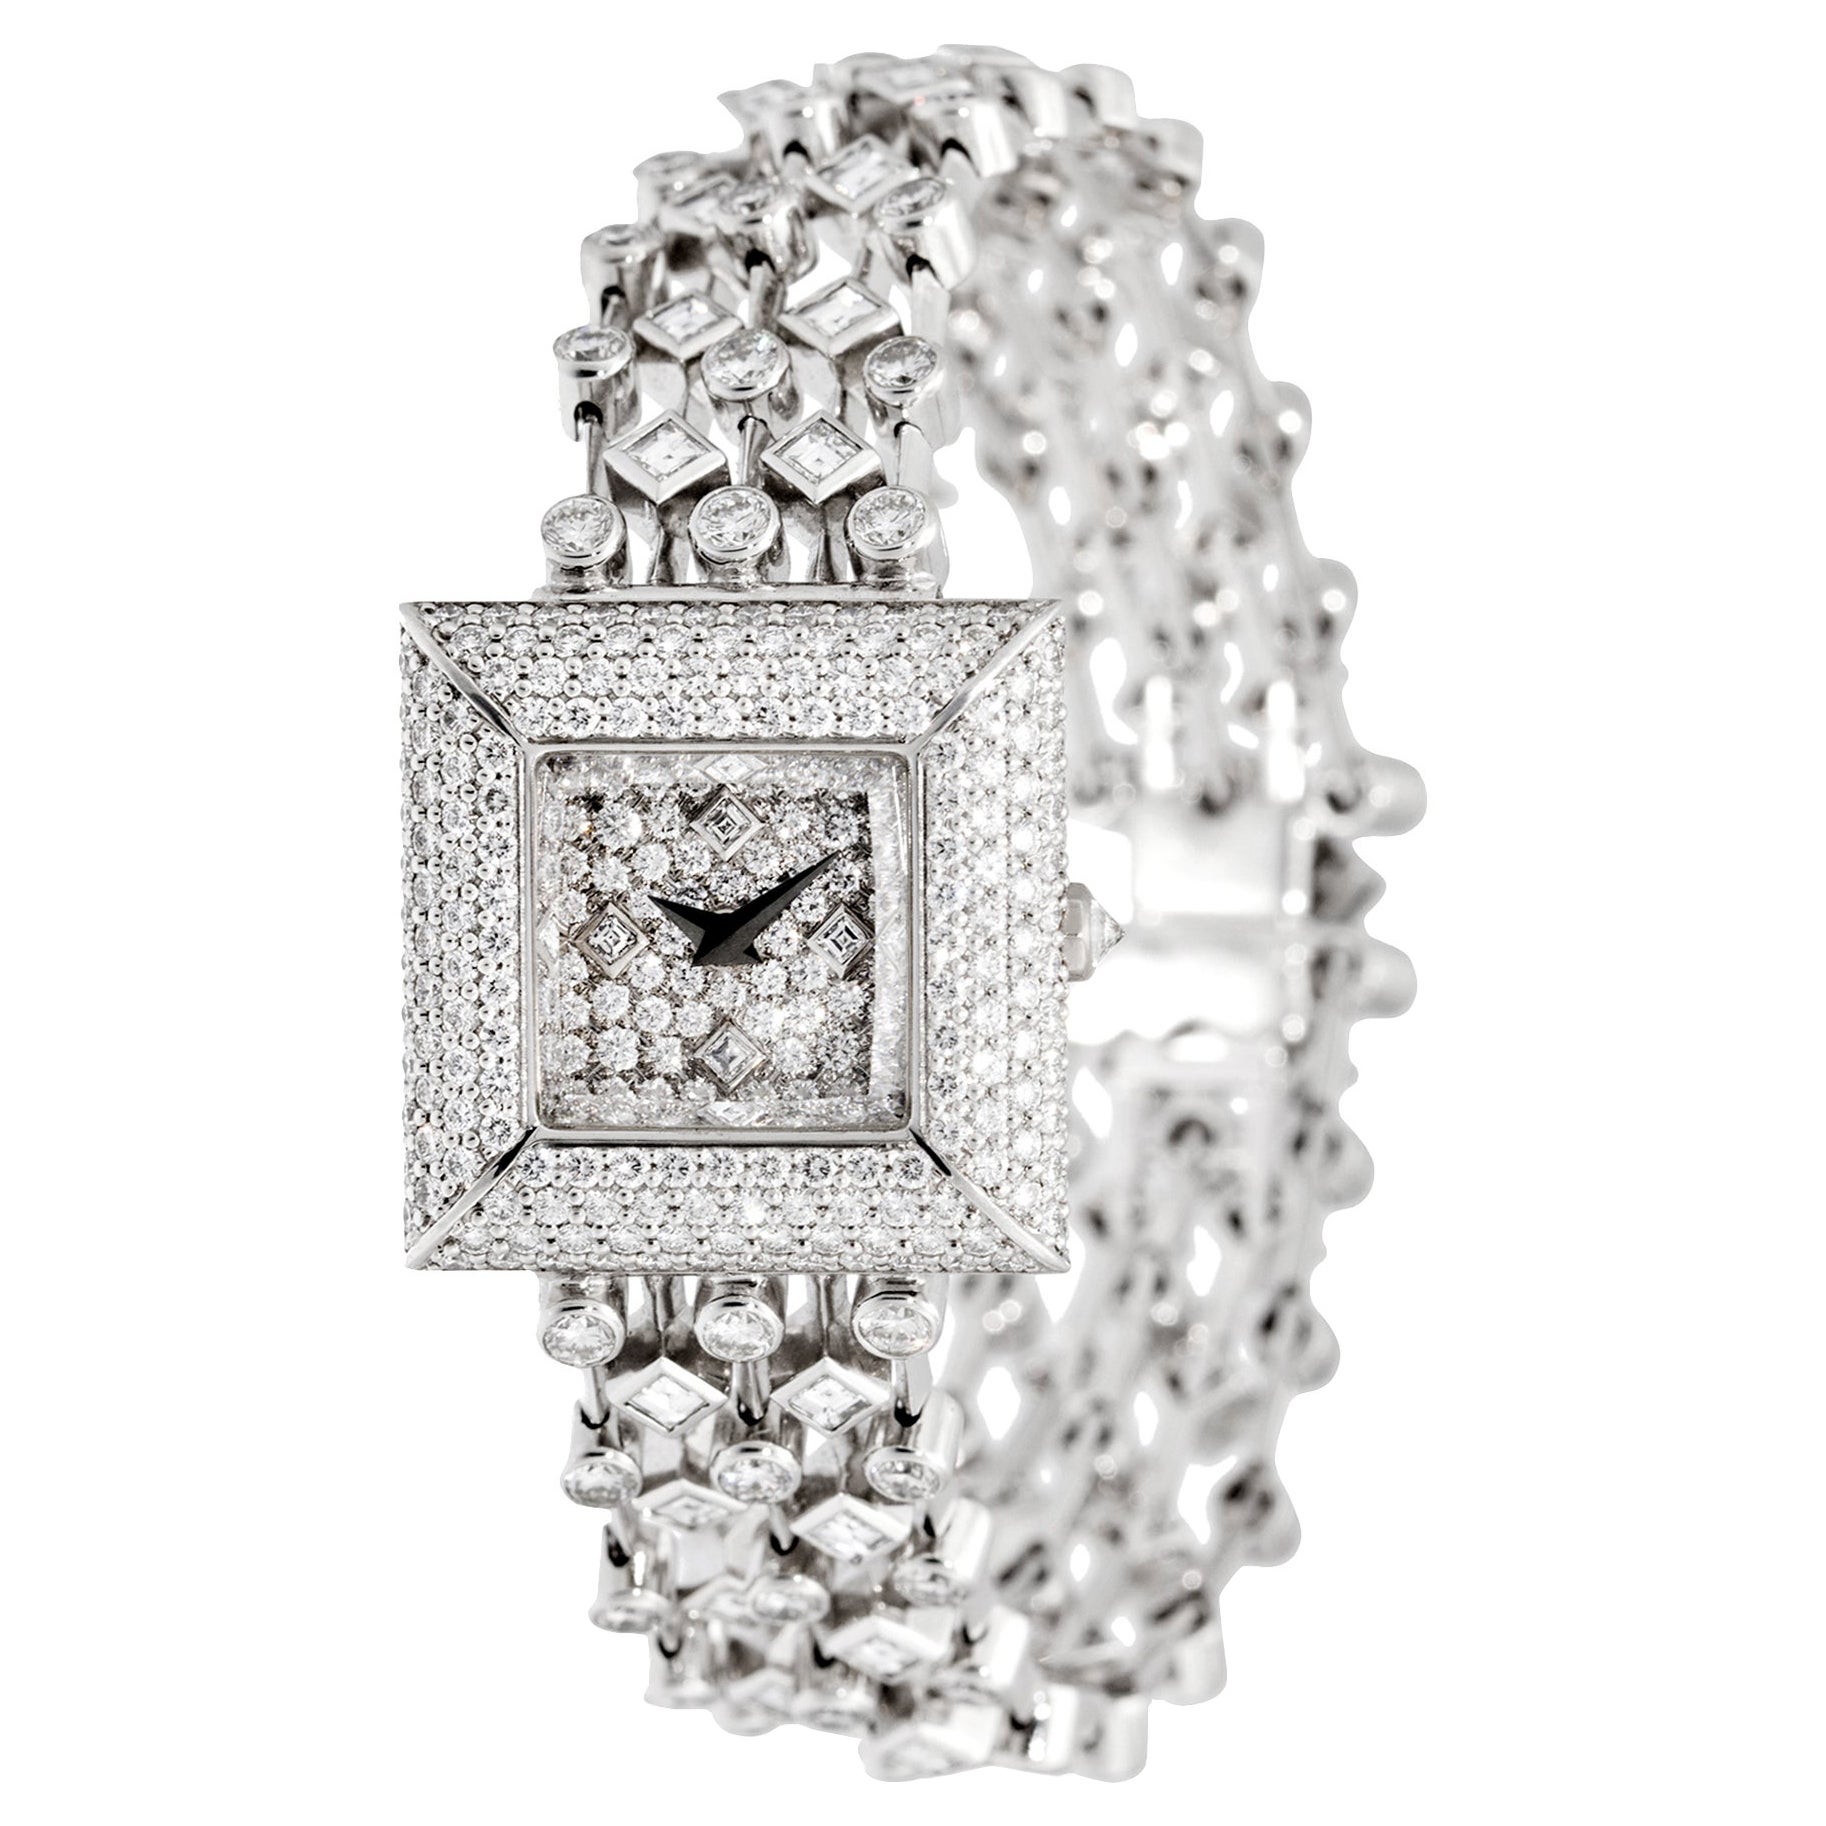 David Morris White Diamond Jewellery Bracelet Watch